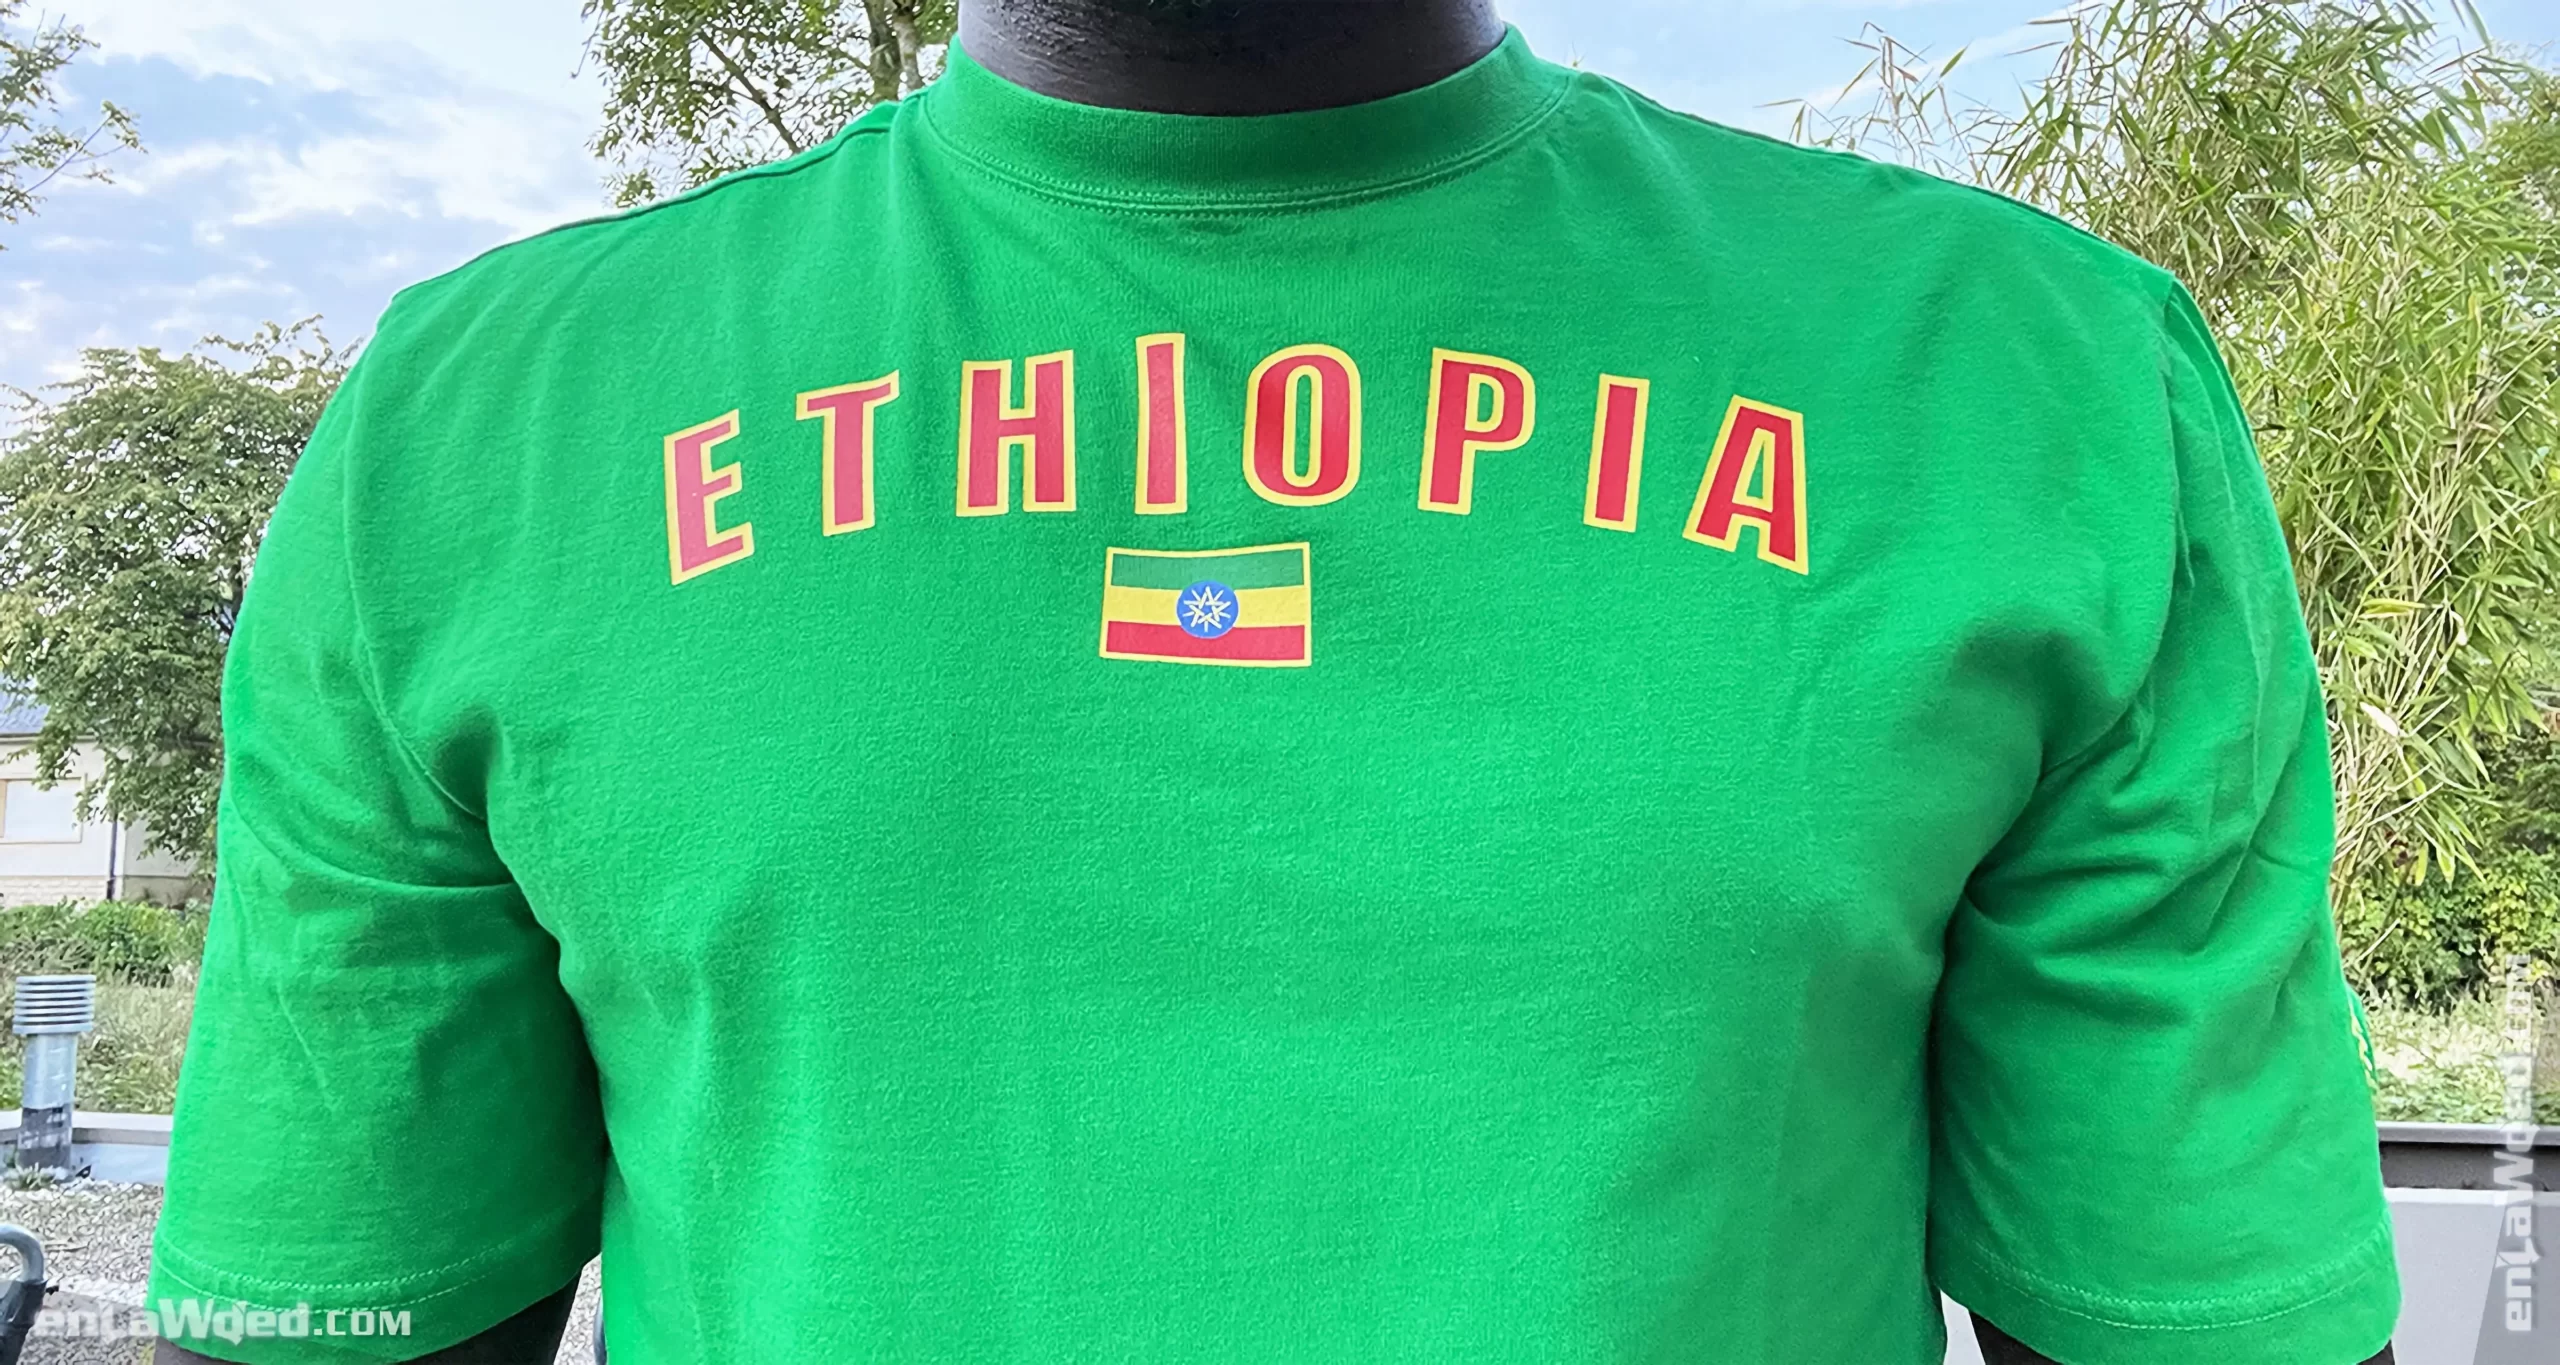 Men’s 2008 Ethiopia T-Shirt by Adidas Originals: Spontaneous (EnLawded.com file #lp1n9x5x12620741293lyvoy6)